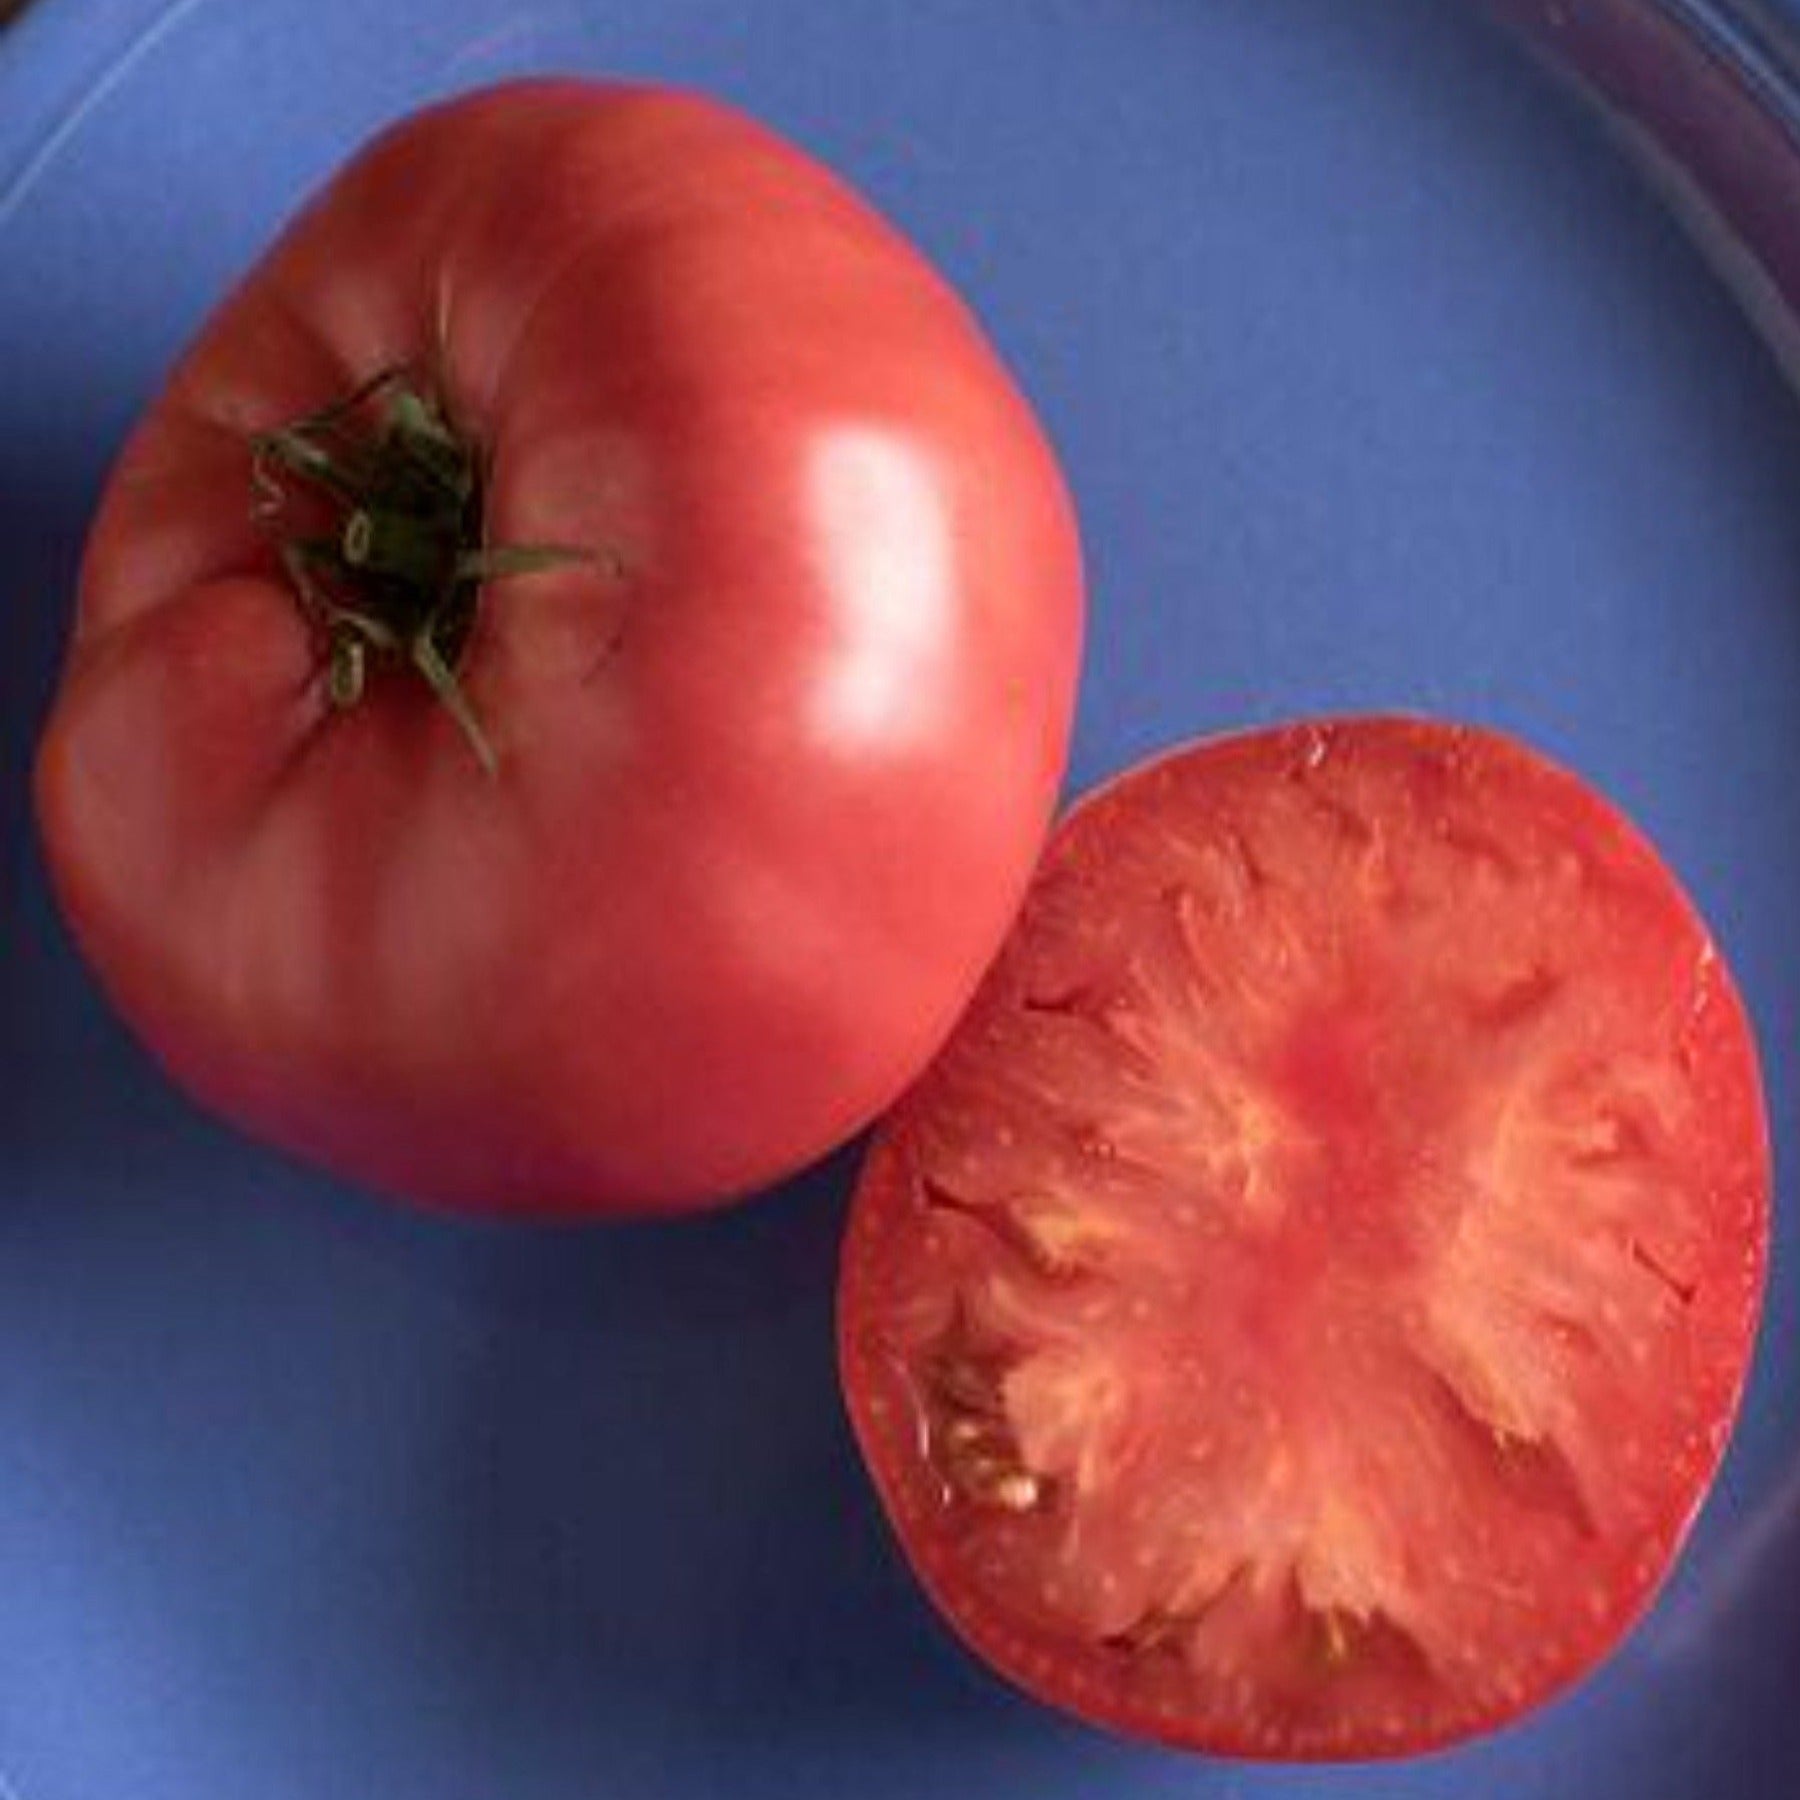 Brandywine Pink Heirloom Tomato Seeds, the taste says it all – Papaws  Garden Supply LLC